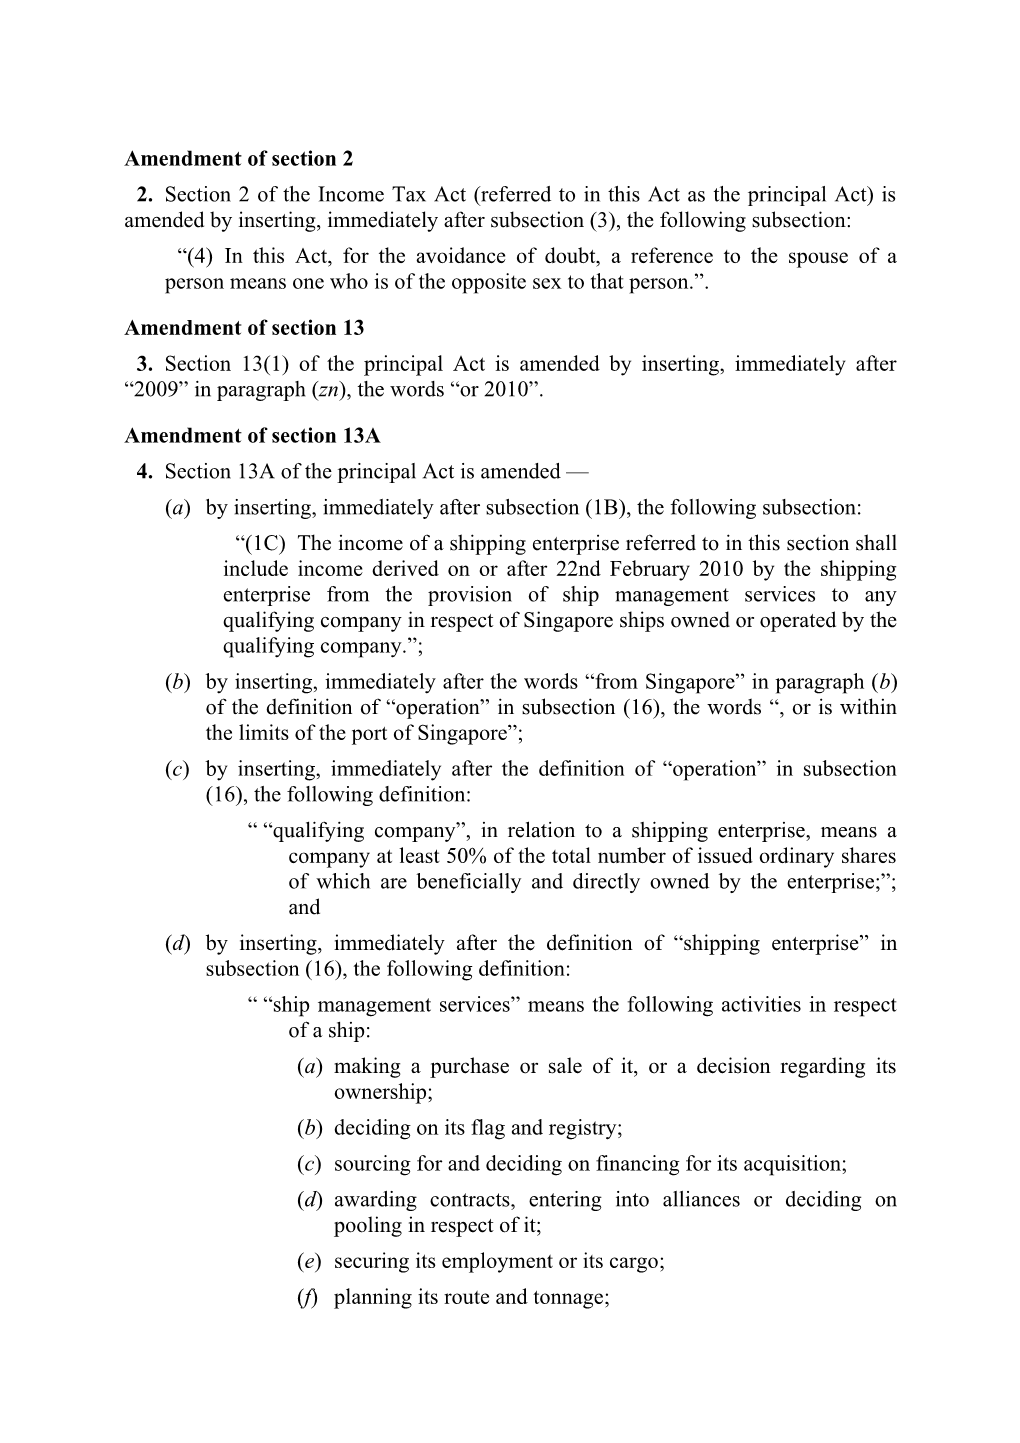 Amendment of Section 2